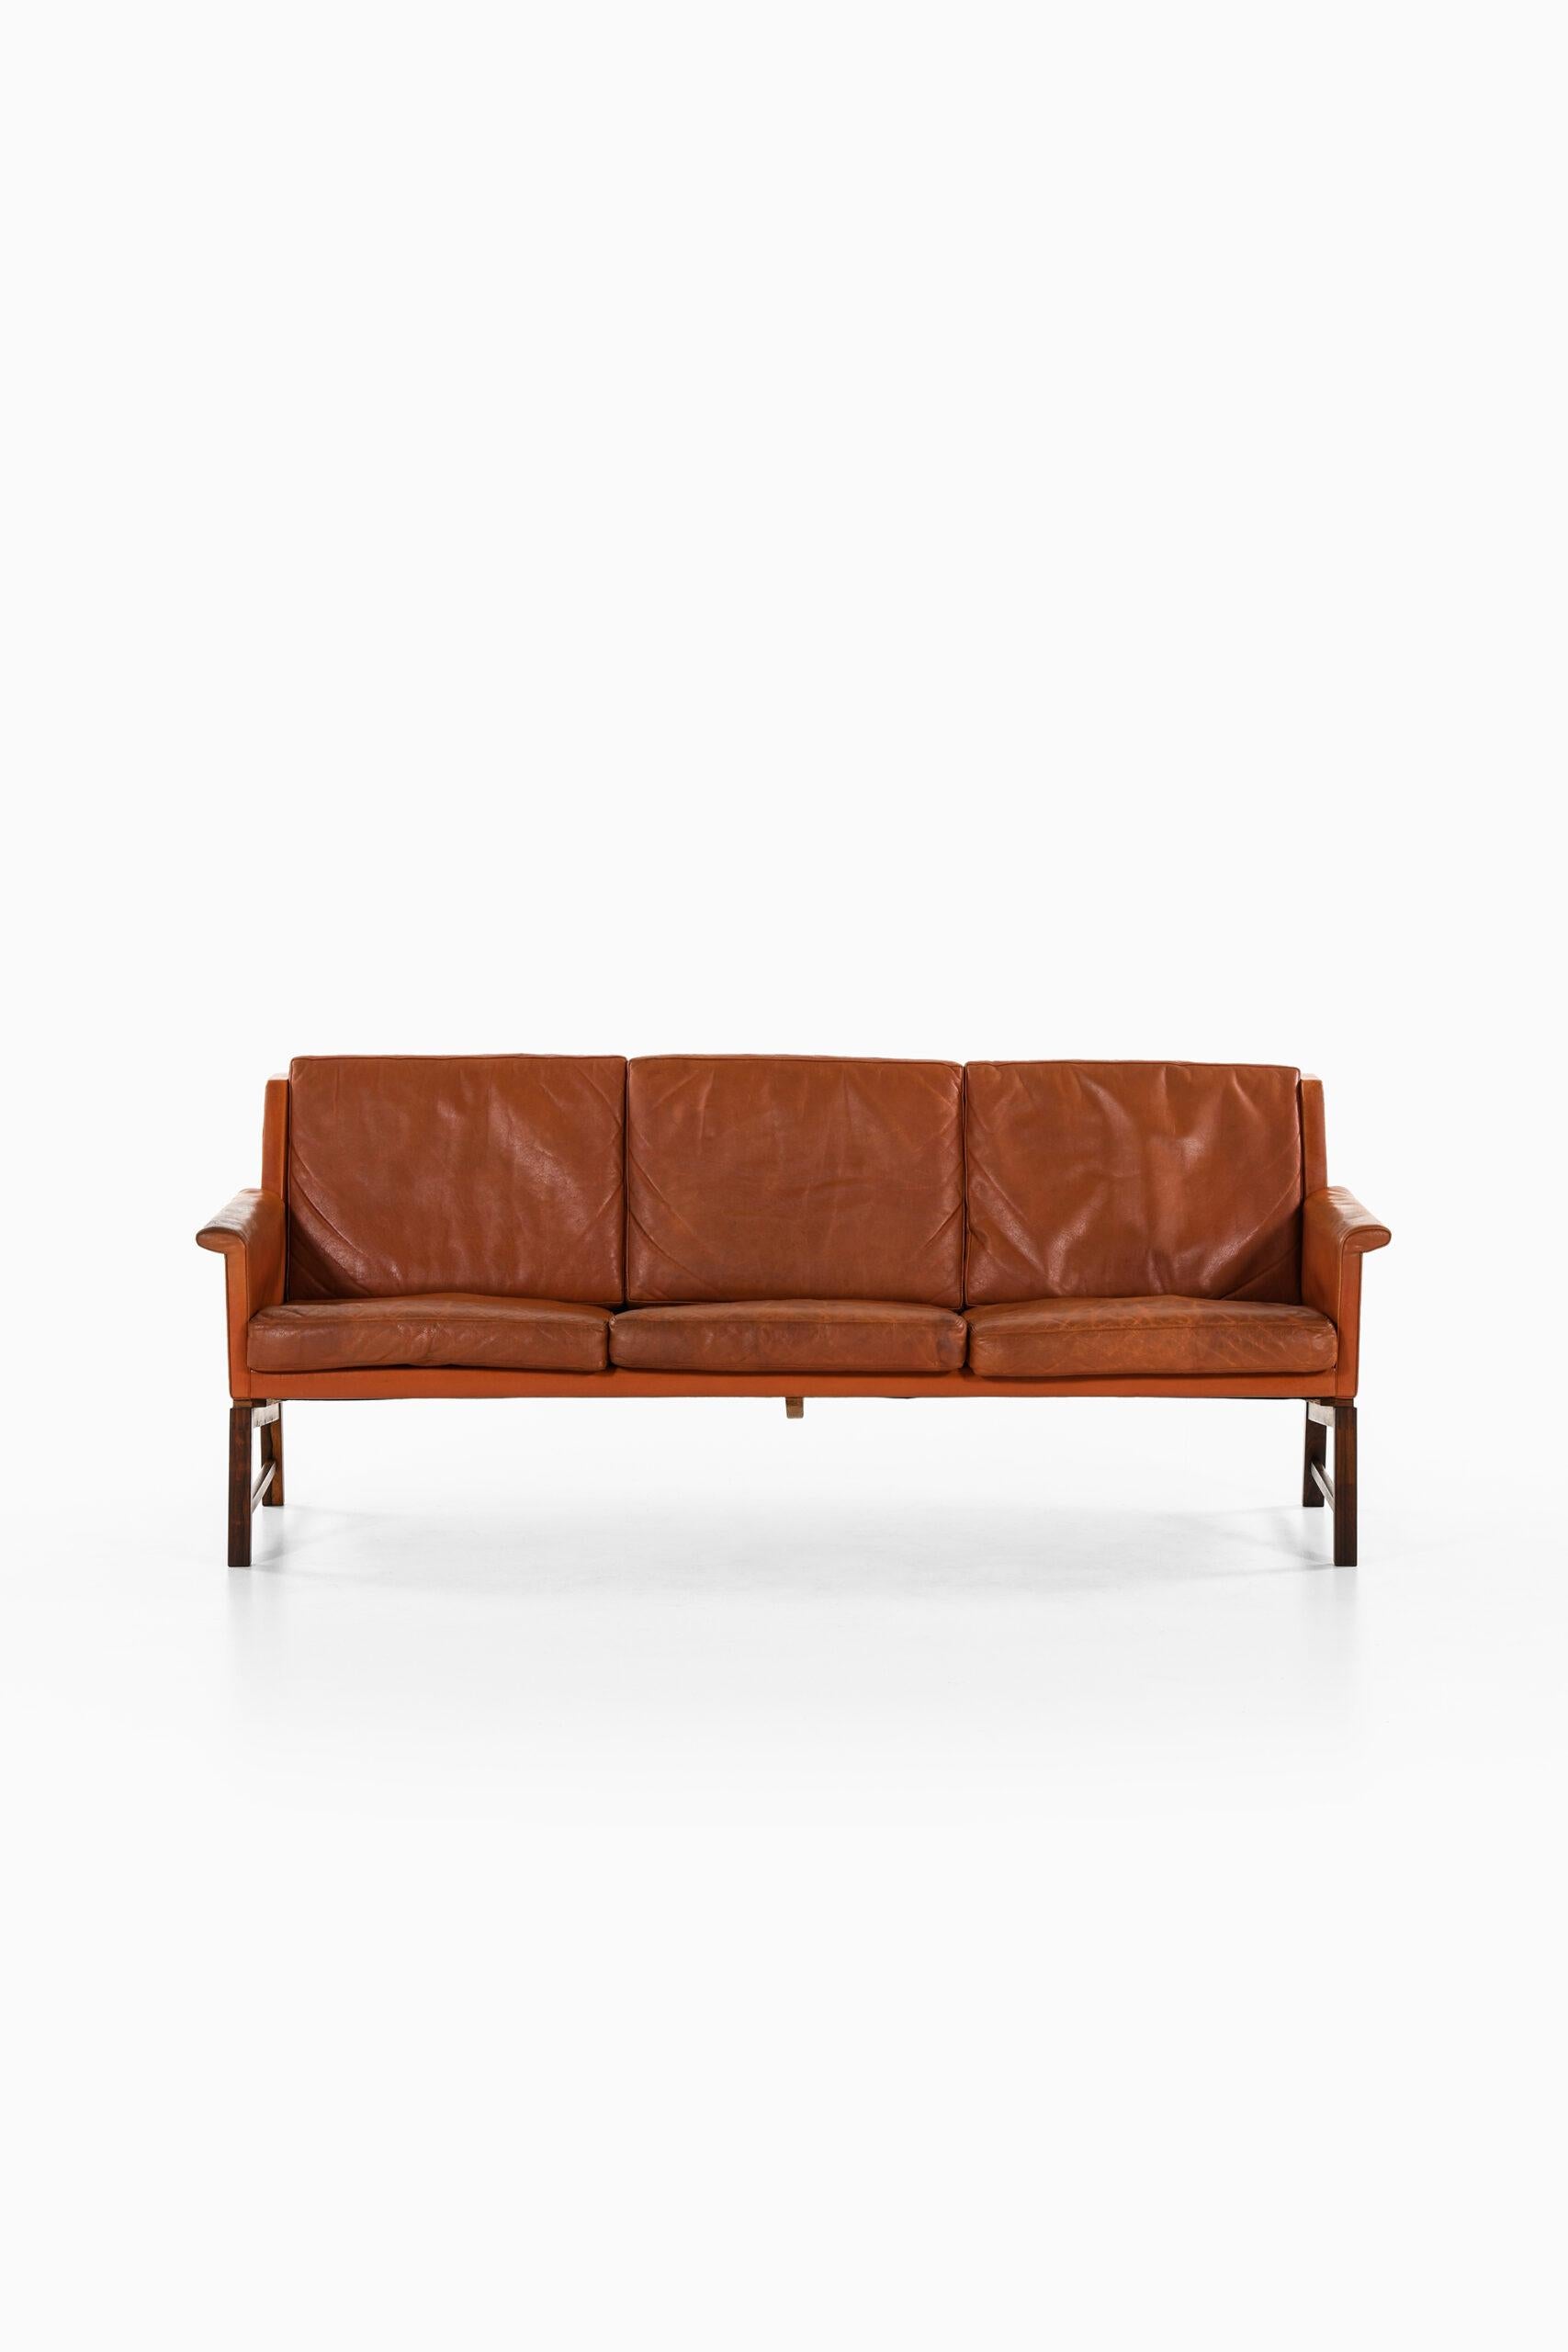 Rare sofa designed by Kai Lyngfeldt Larsen. Produced in Søborg Møbler in Denmark.